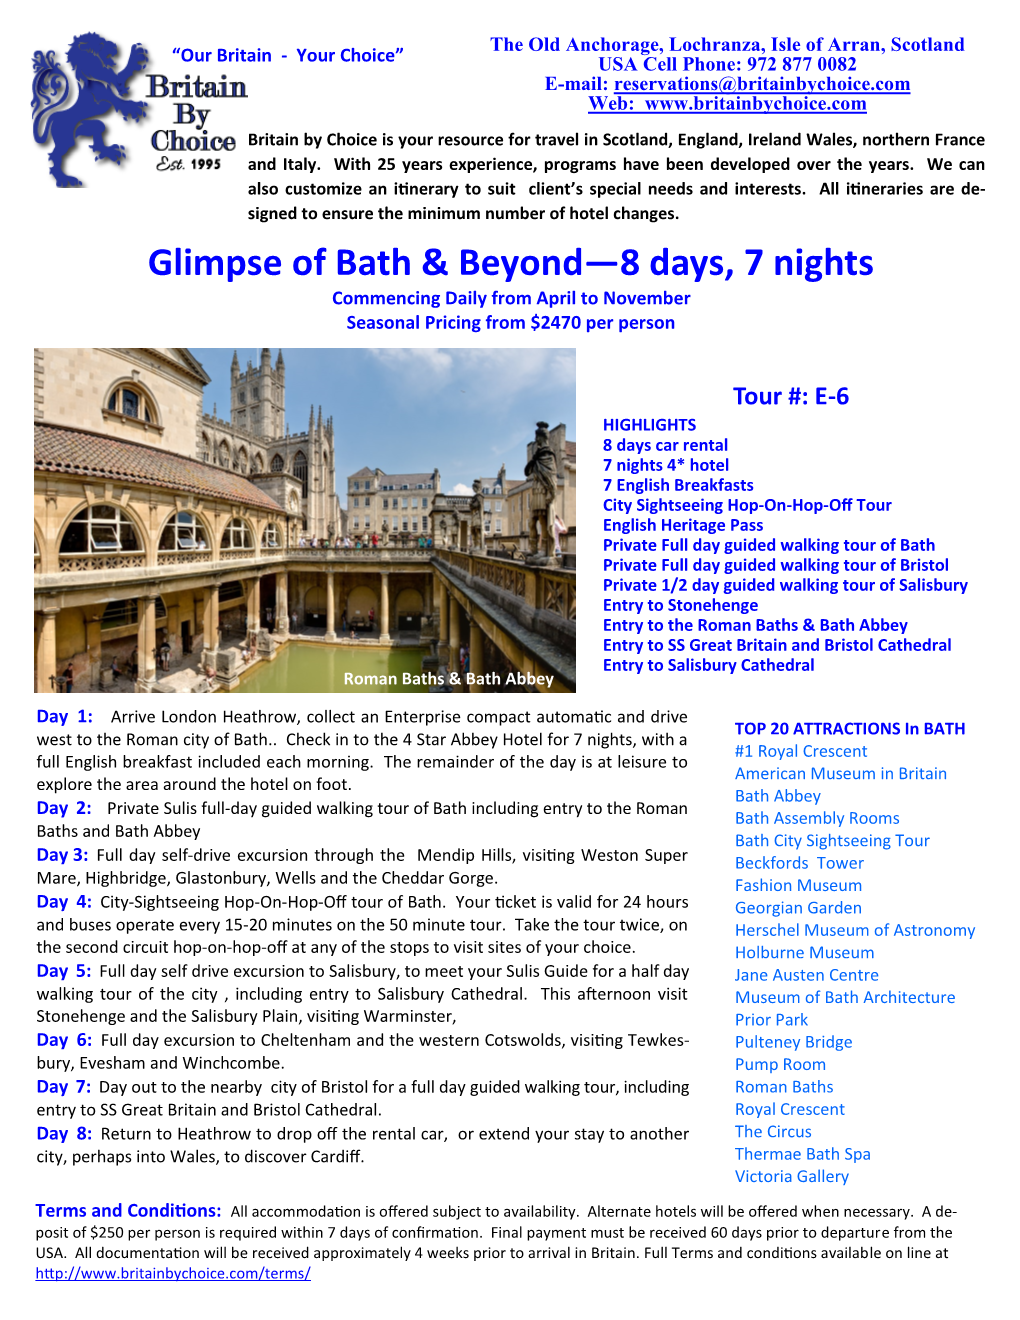 Glimpse of Bath & Beyond—8 Days, 7 Nights